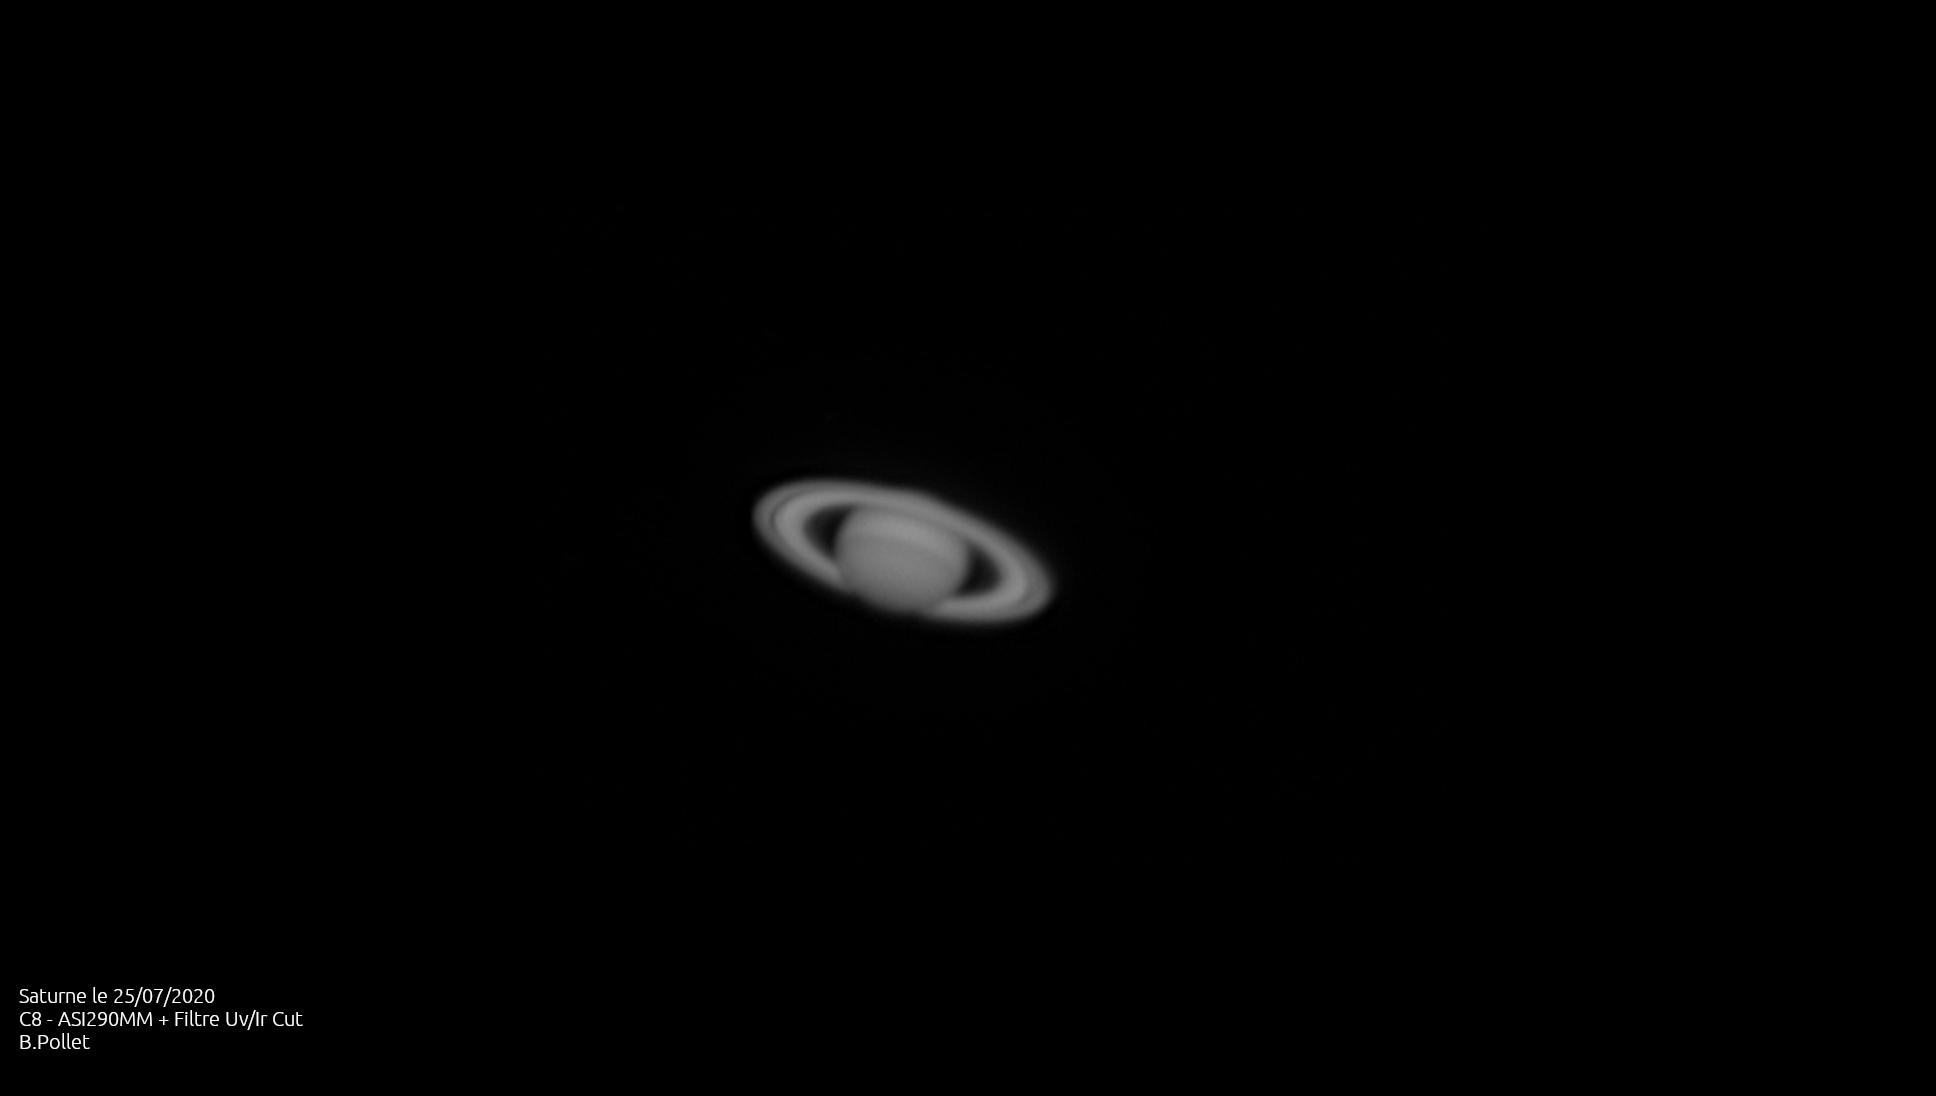 2020-07-24_Saturne-texte.jpg